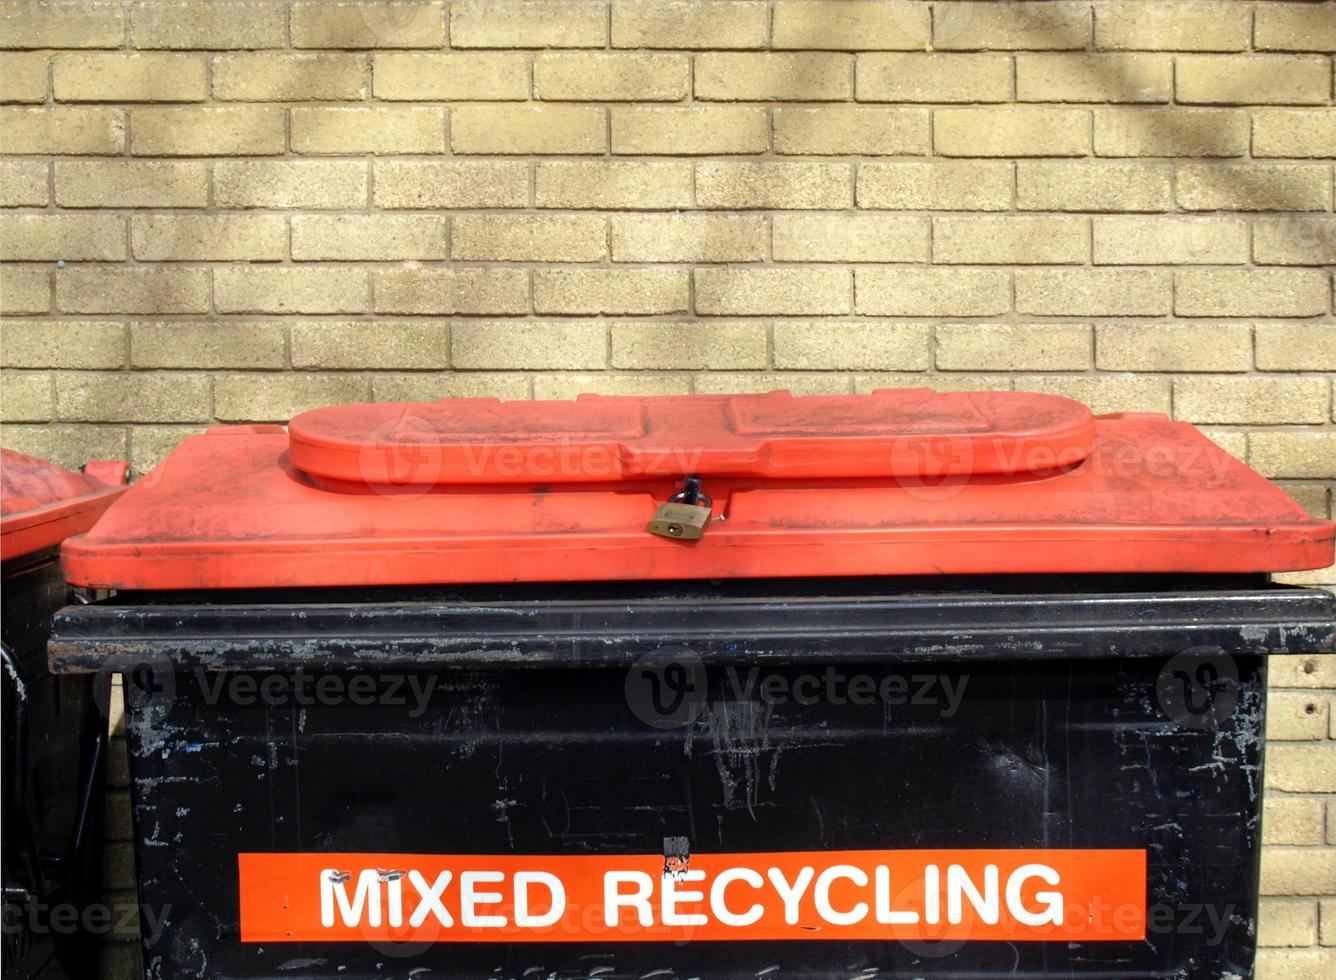 Litter bin for mixed recycling photo